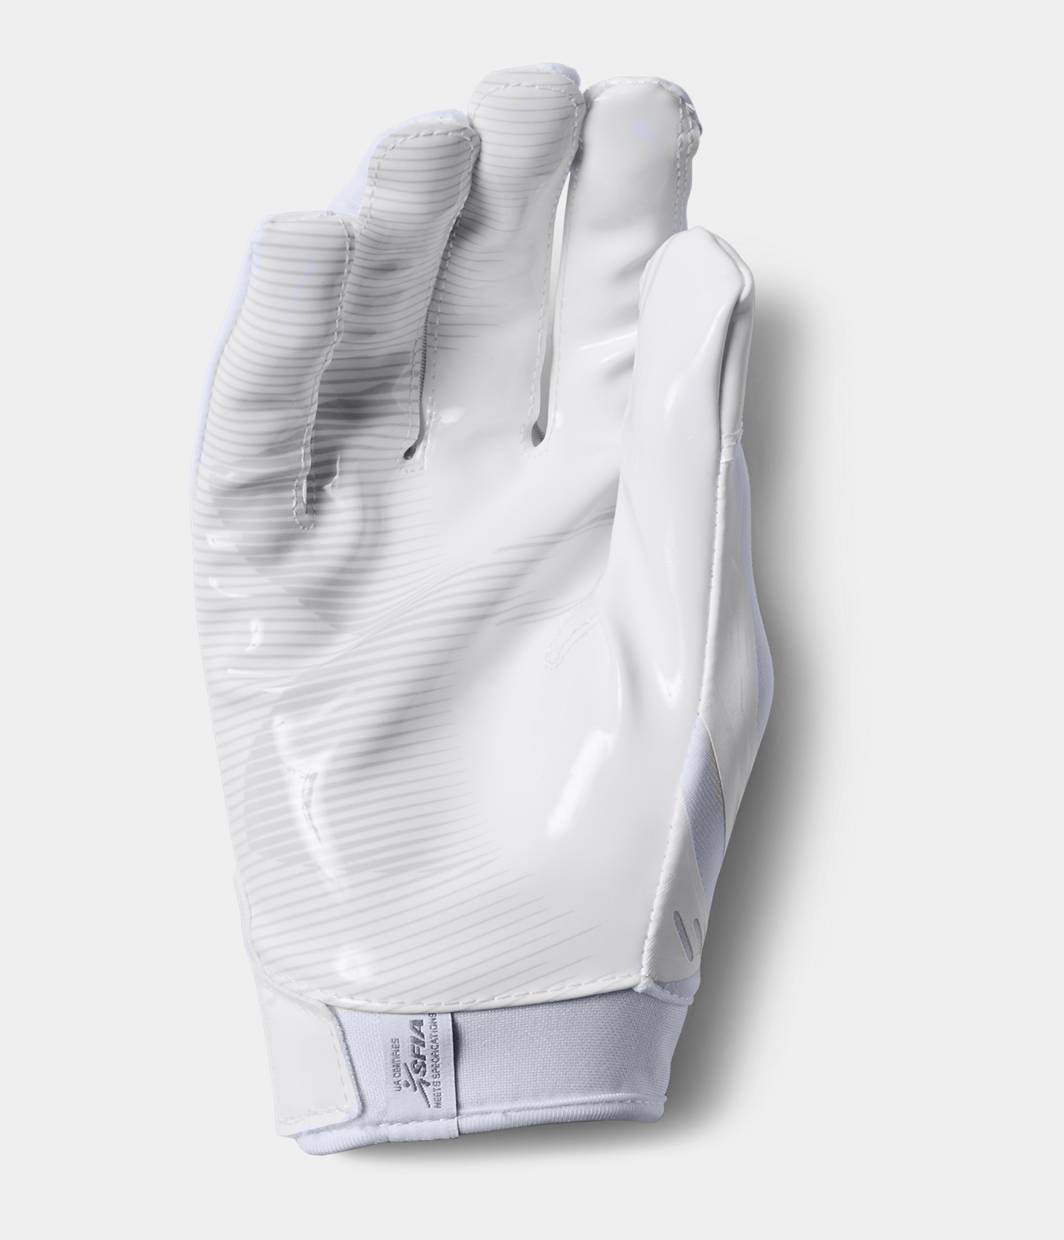 WHT/BLK Multi Size M/L/XL *New* Men's Under Armour F6 Football Gloves 1304694 